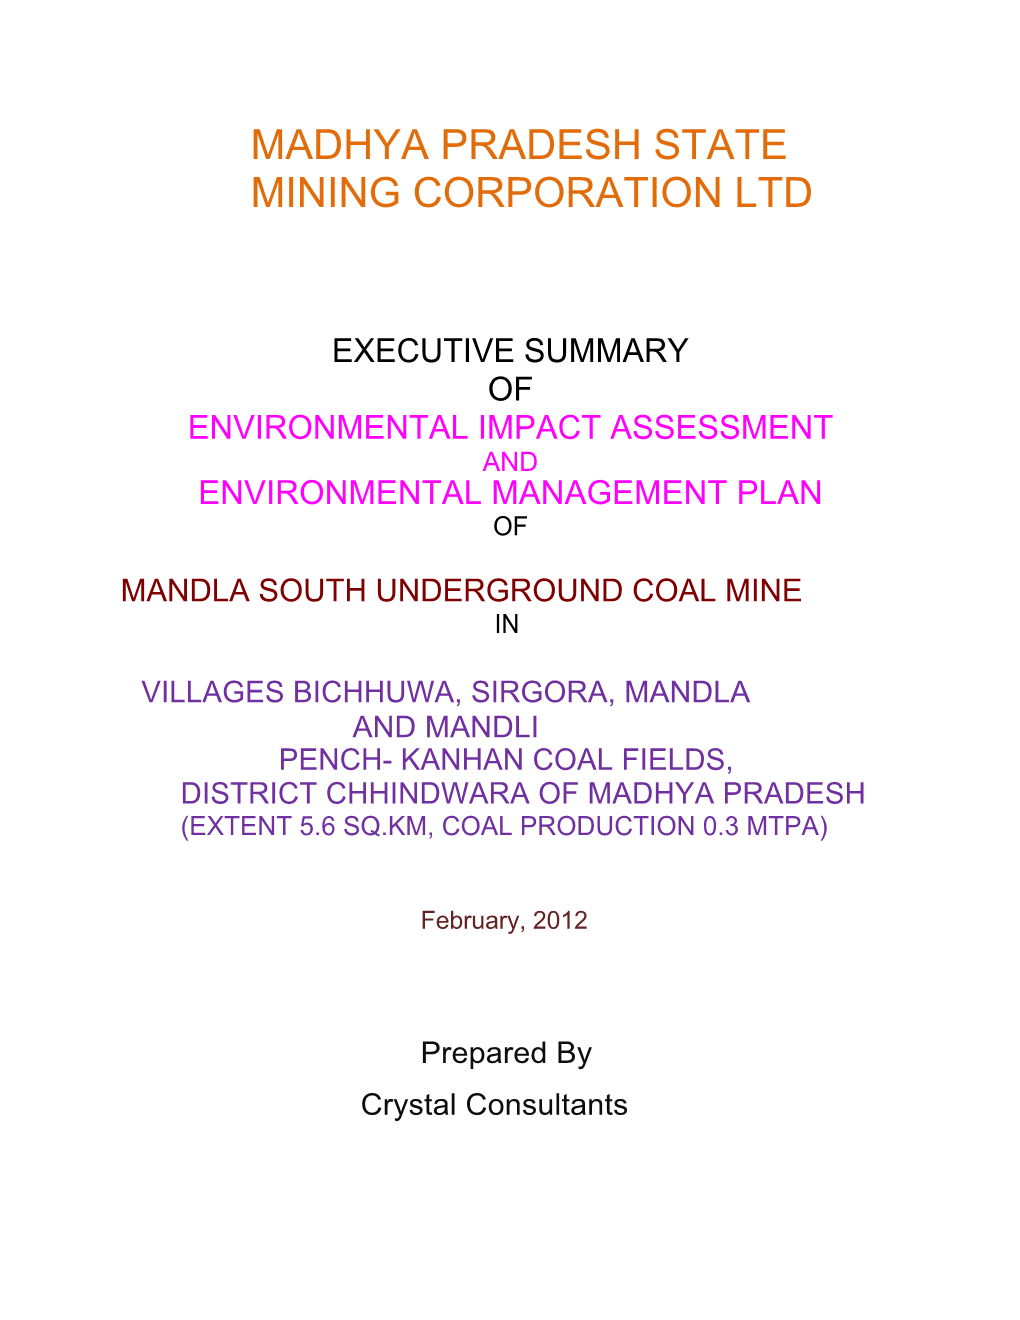 Madhya Pradesh State Mining Corporation Ltd